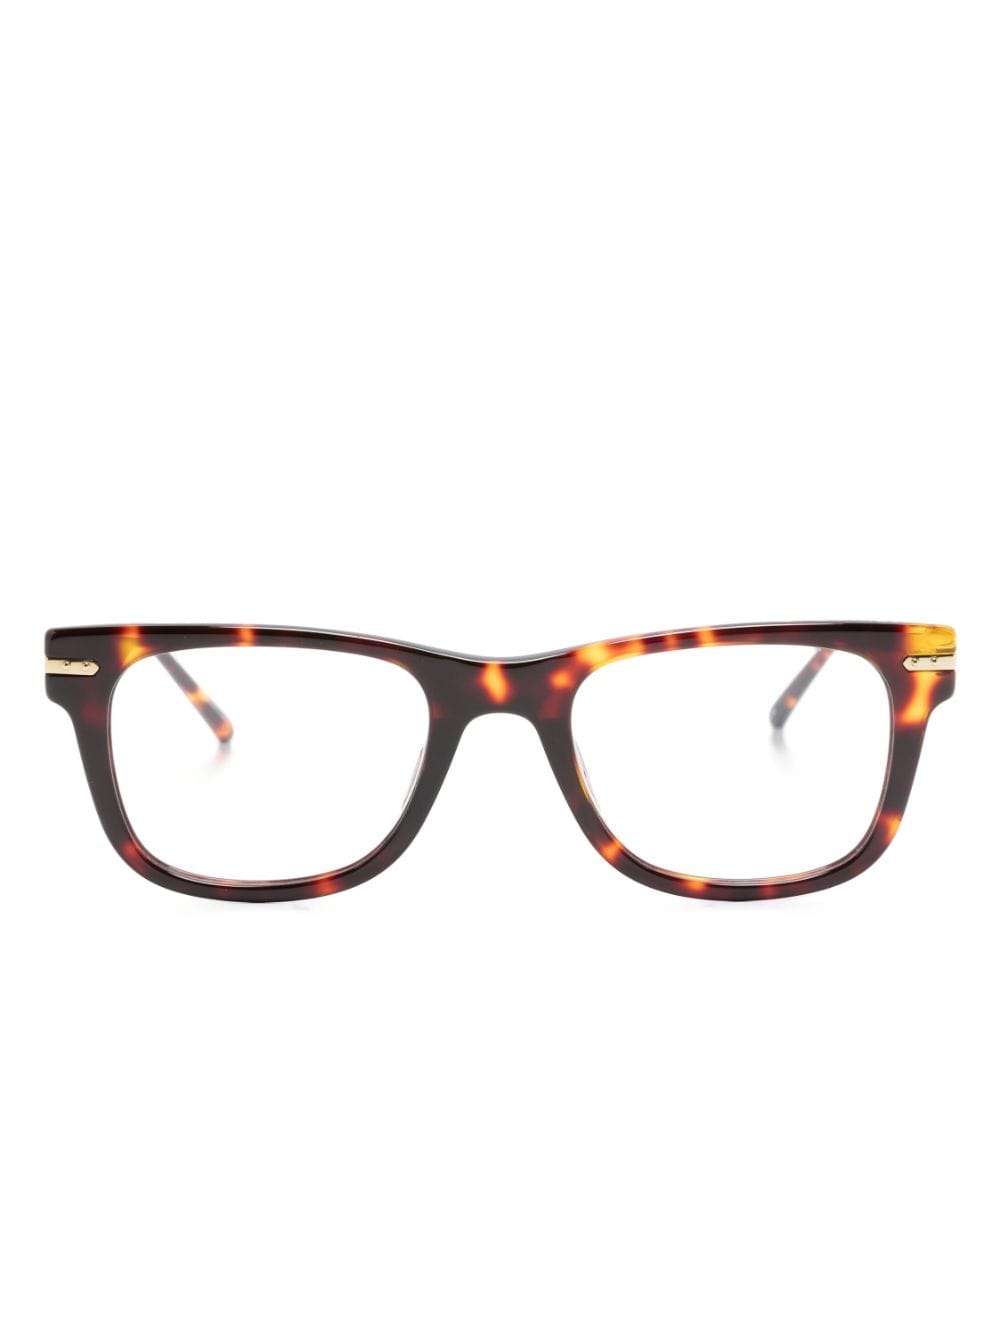 Portico square-frame glasses